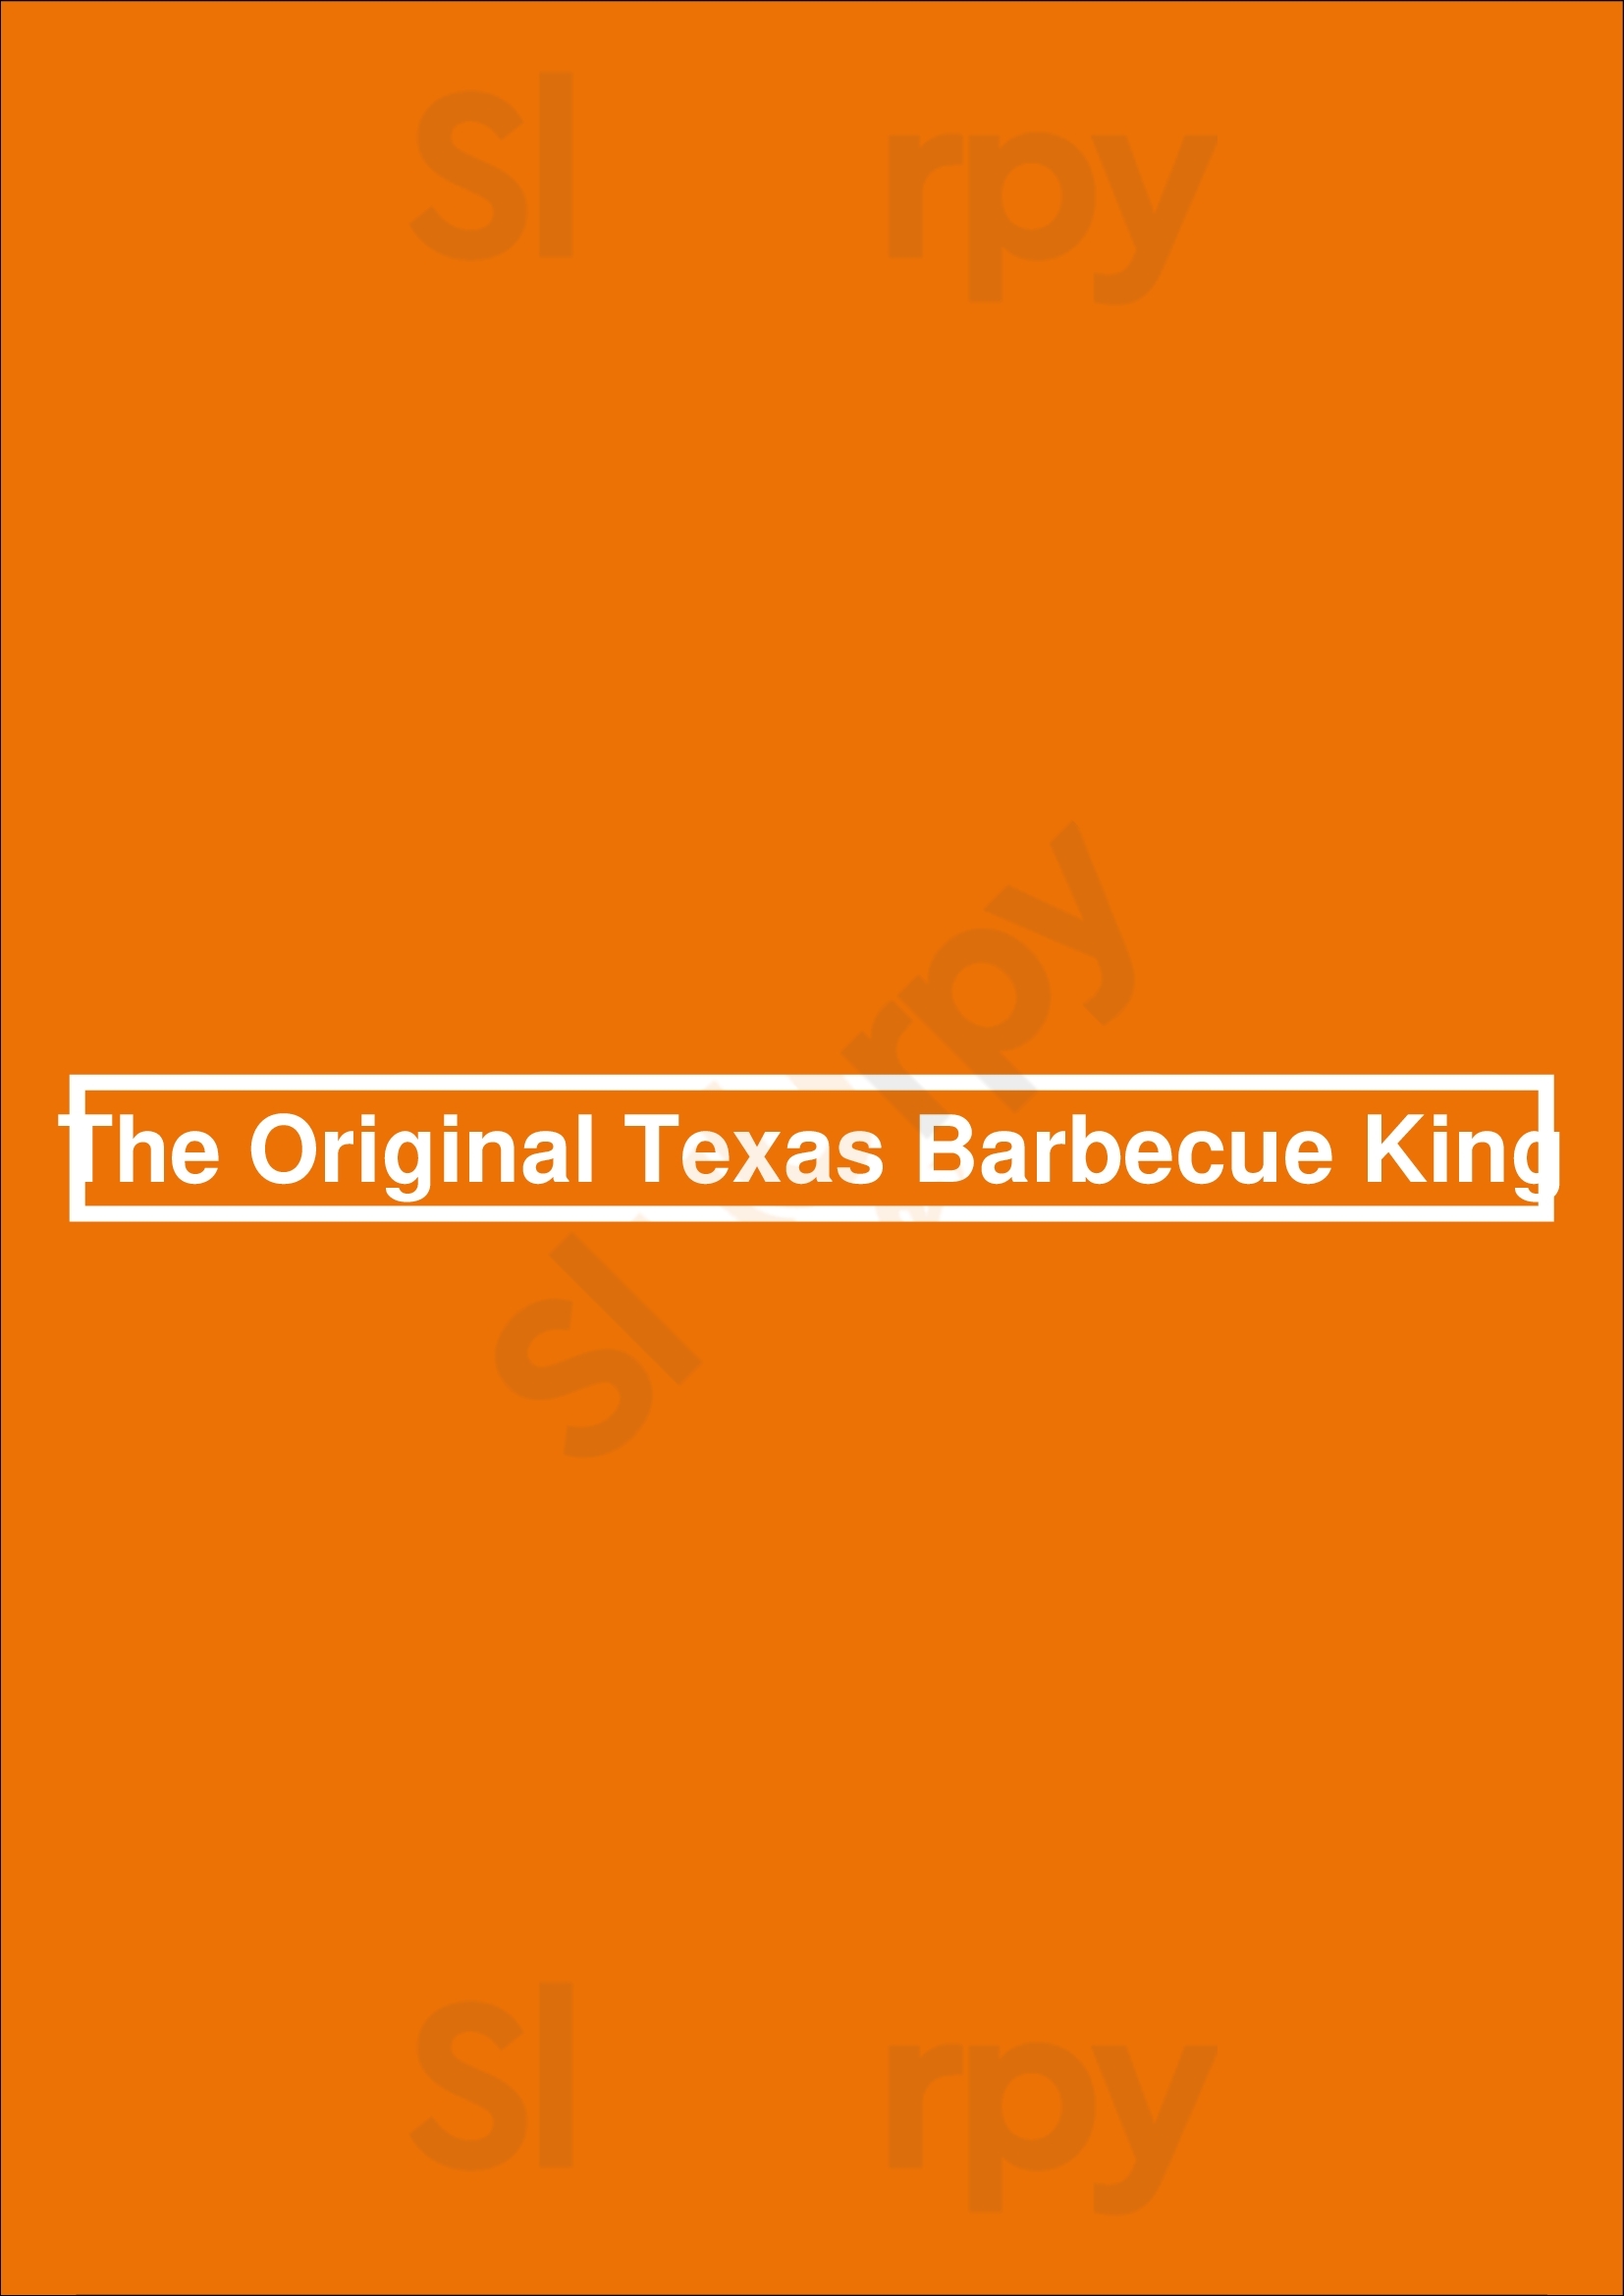 The Original Texas Barbecue King Los Angeles Menu - 1